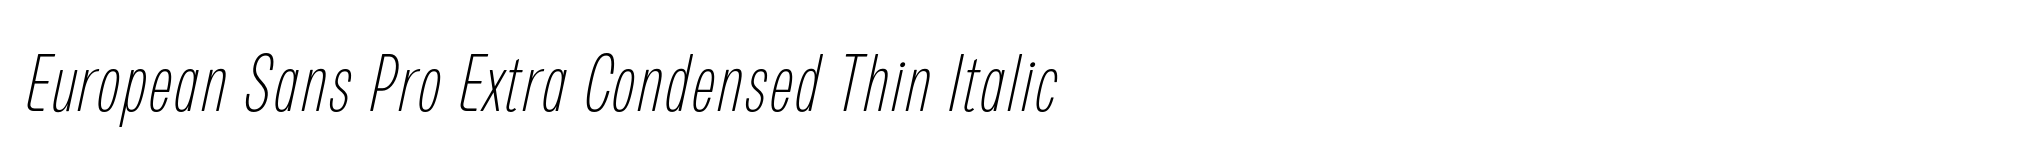 European Sans Pro Extra Condensed Thin Italic image